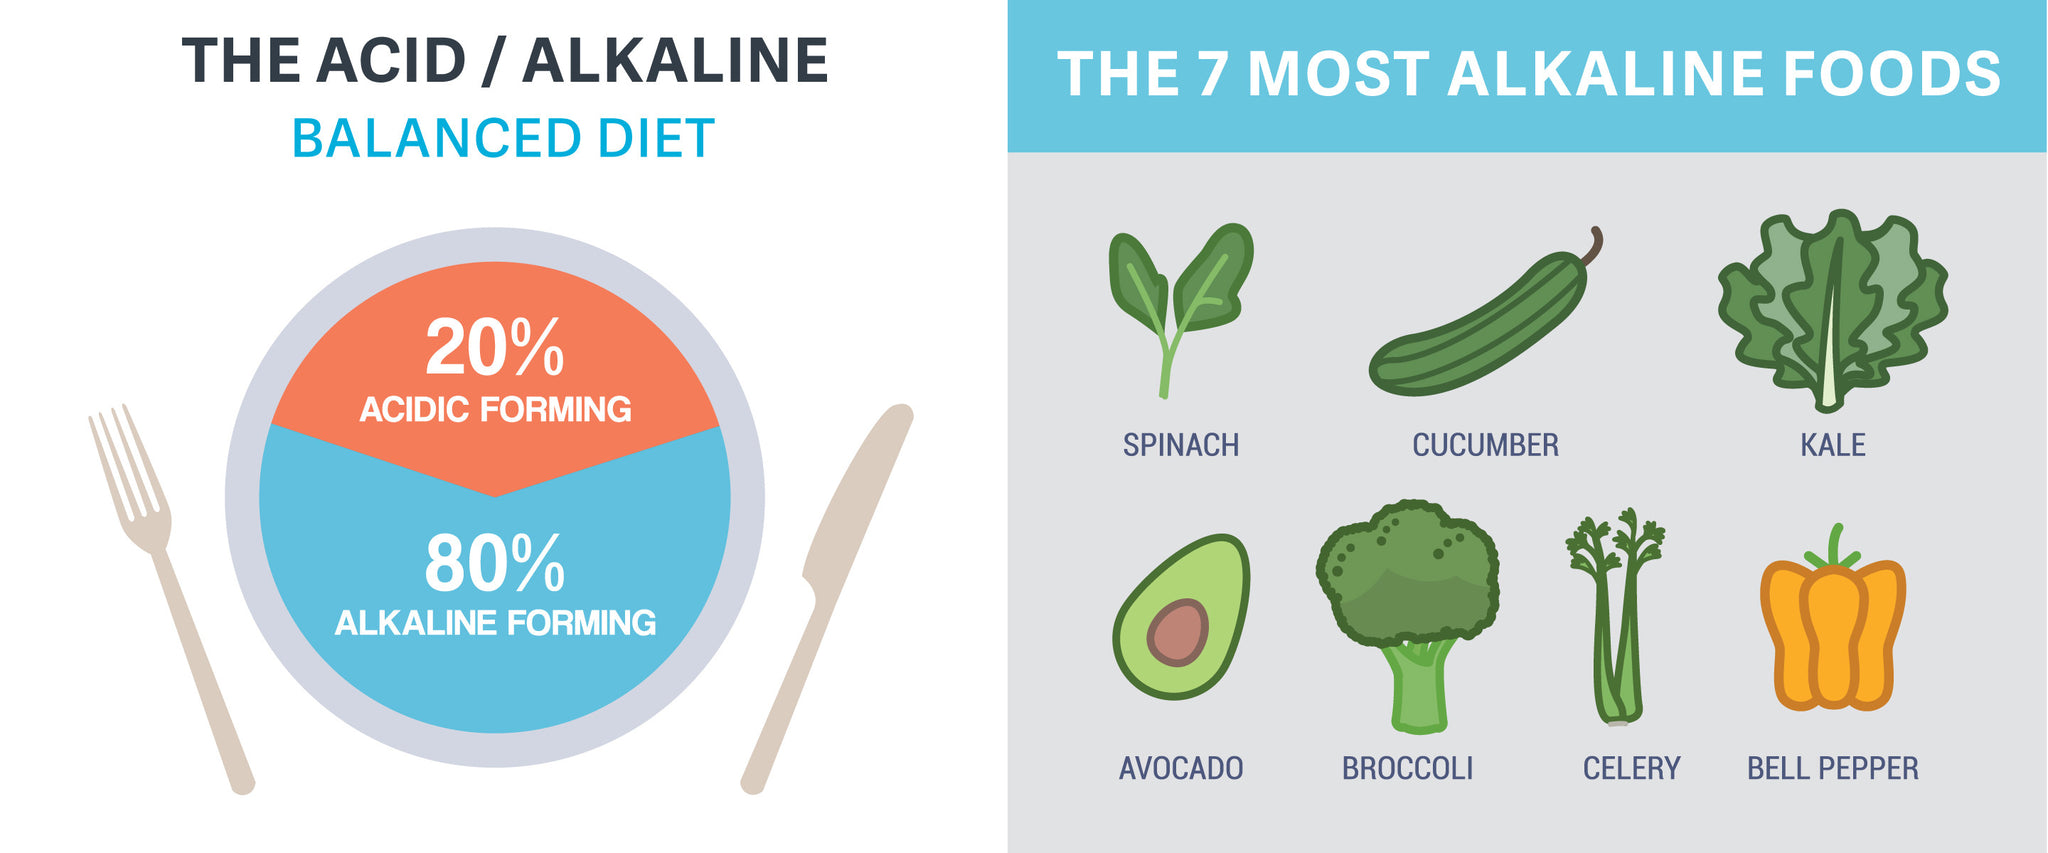 How to Eat an Alkaline Diet